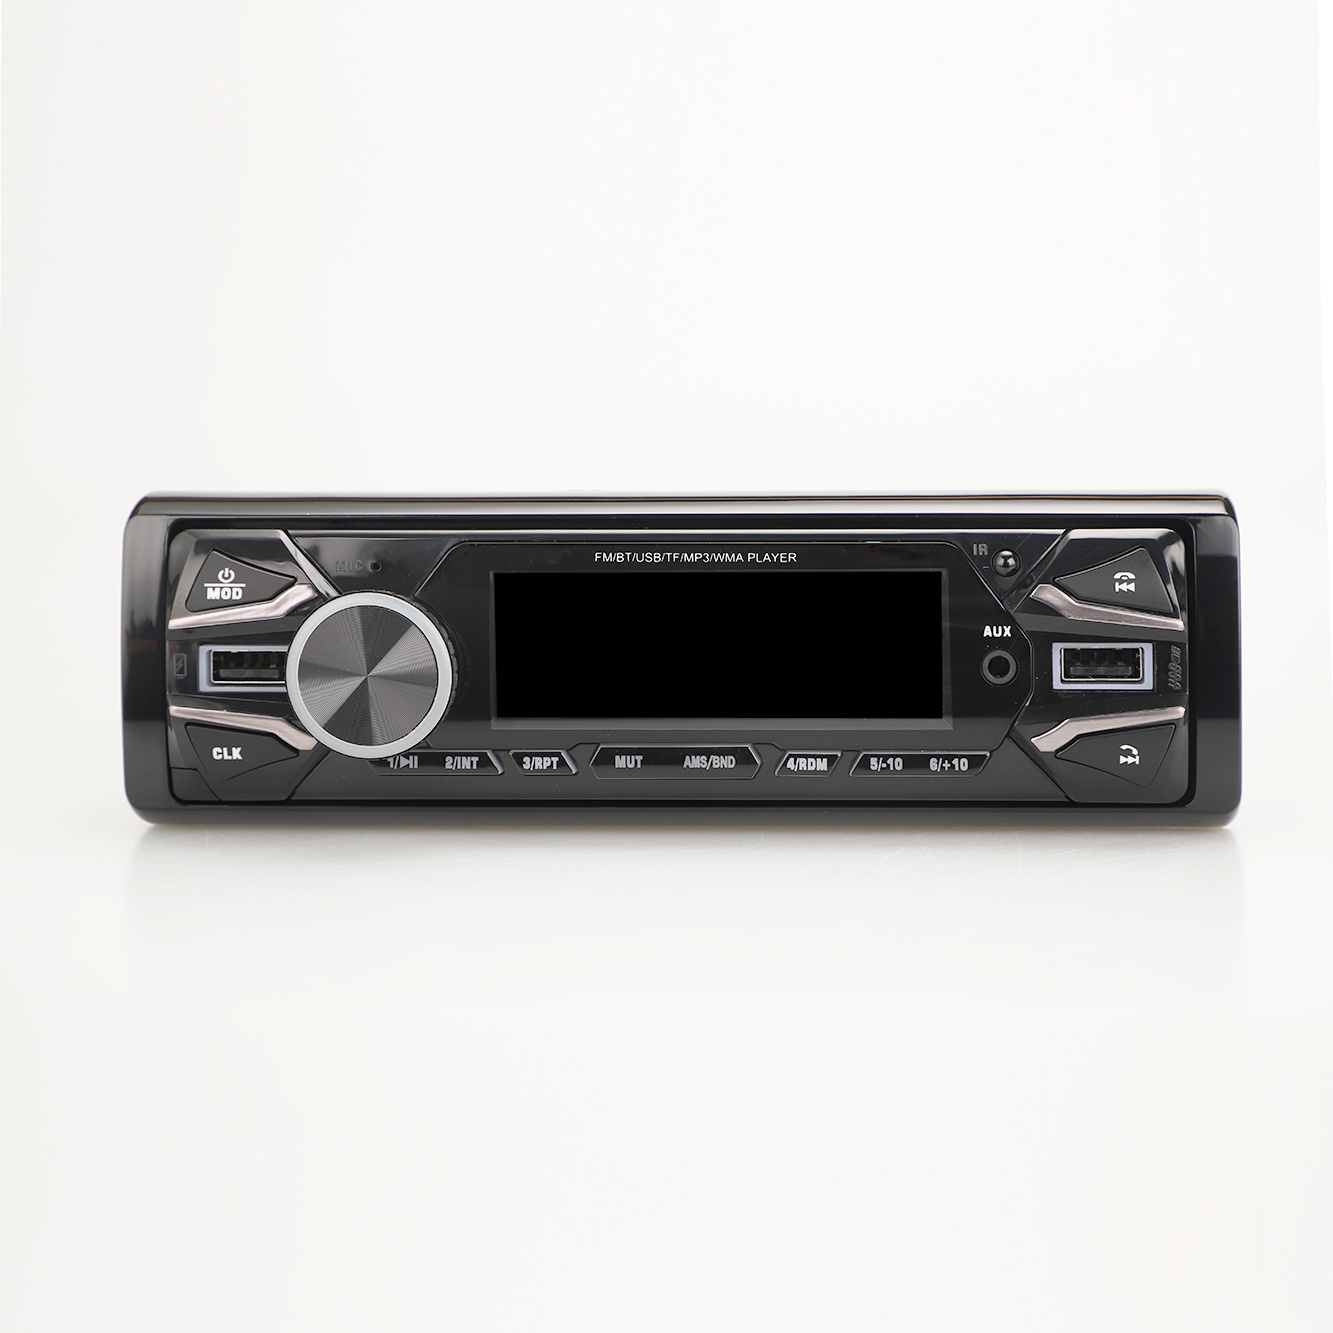 Auto MP3 Audio MP3 Player Auto Ladegerät Auto Stereo Auto LCD Player Auto Audio Auto Zubehör Ein DIN Auto MP3 mit Dual USB